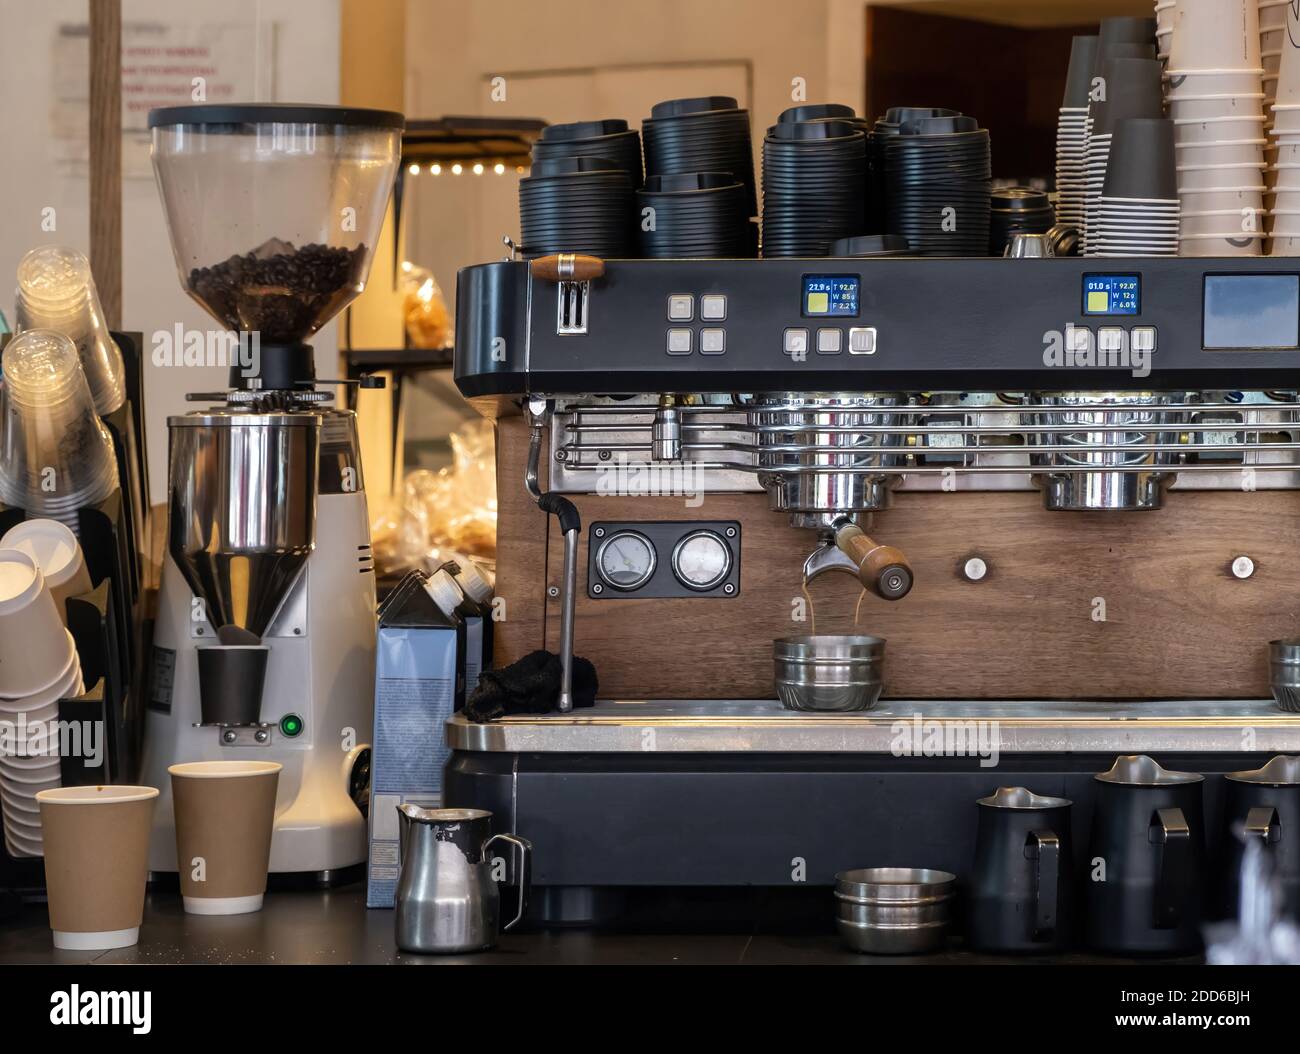 New Retro Designed Commercial Coffee Machine Stock Photo